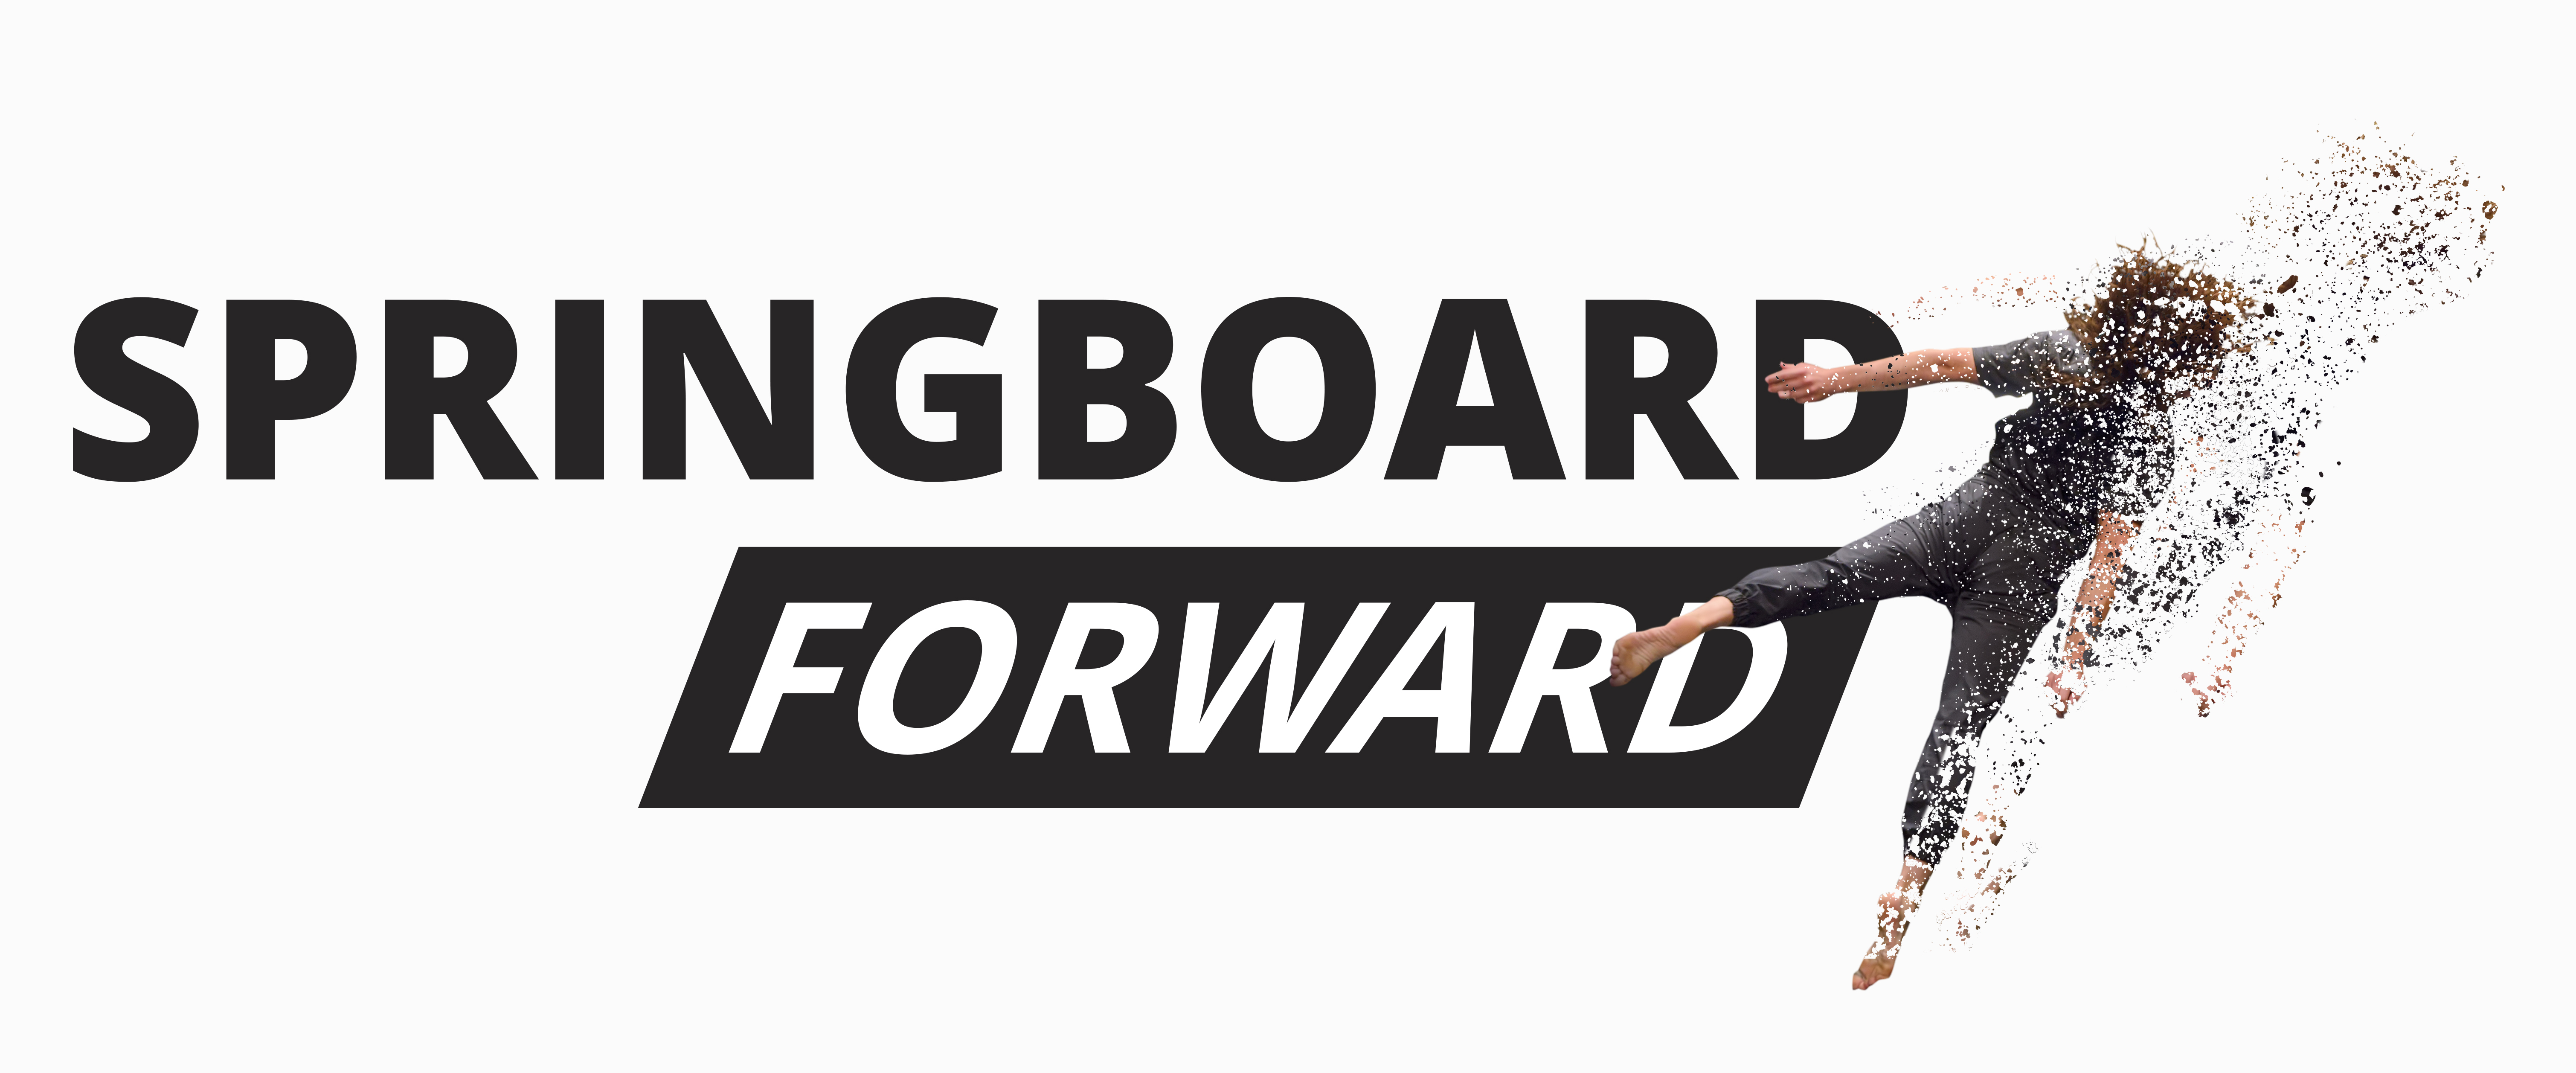 Springboard Forward